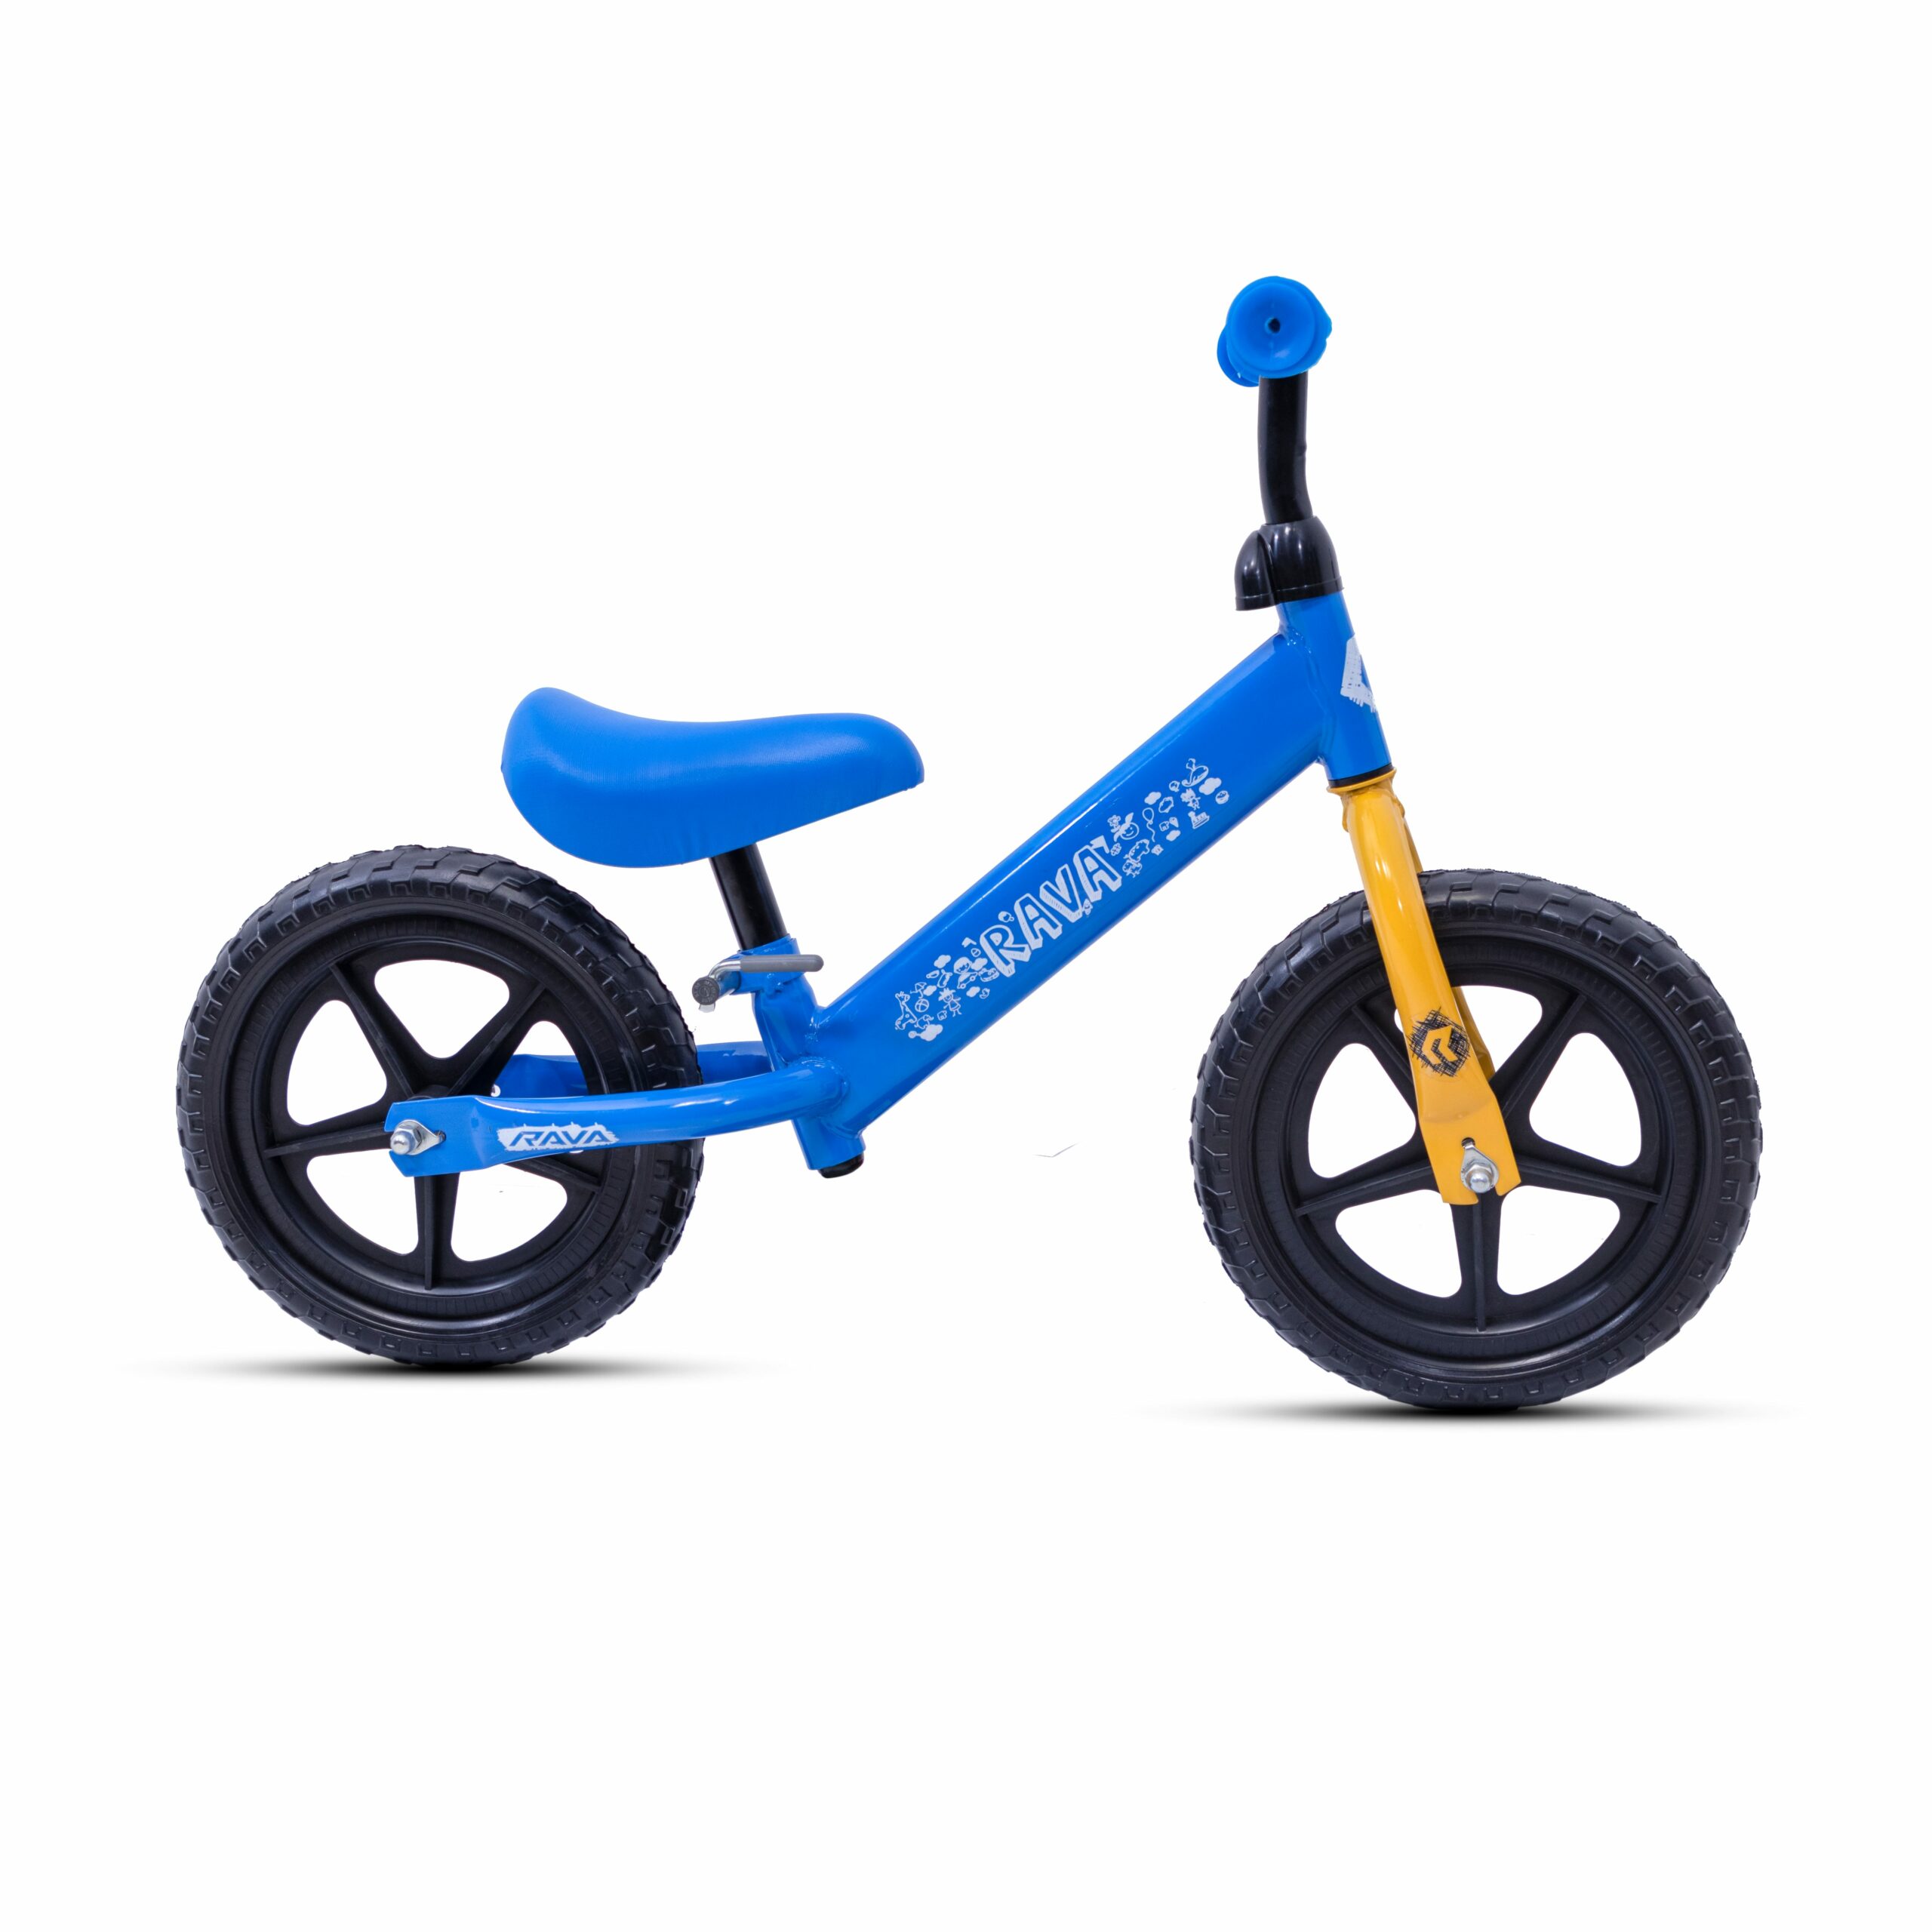 Bicicleta Infantil Rava Sunny - Azul